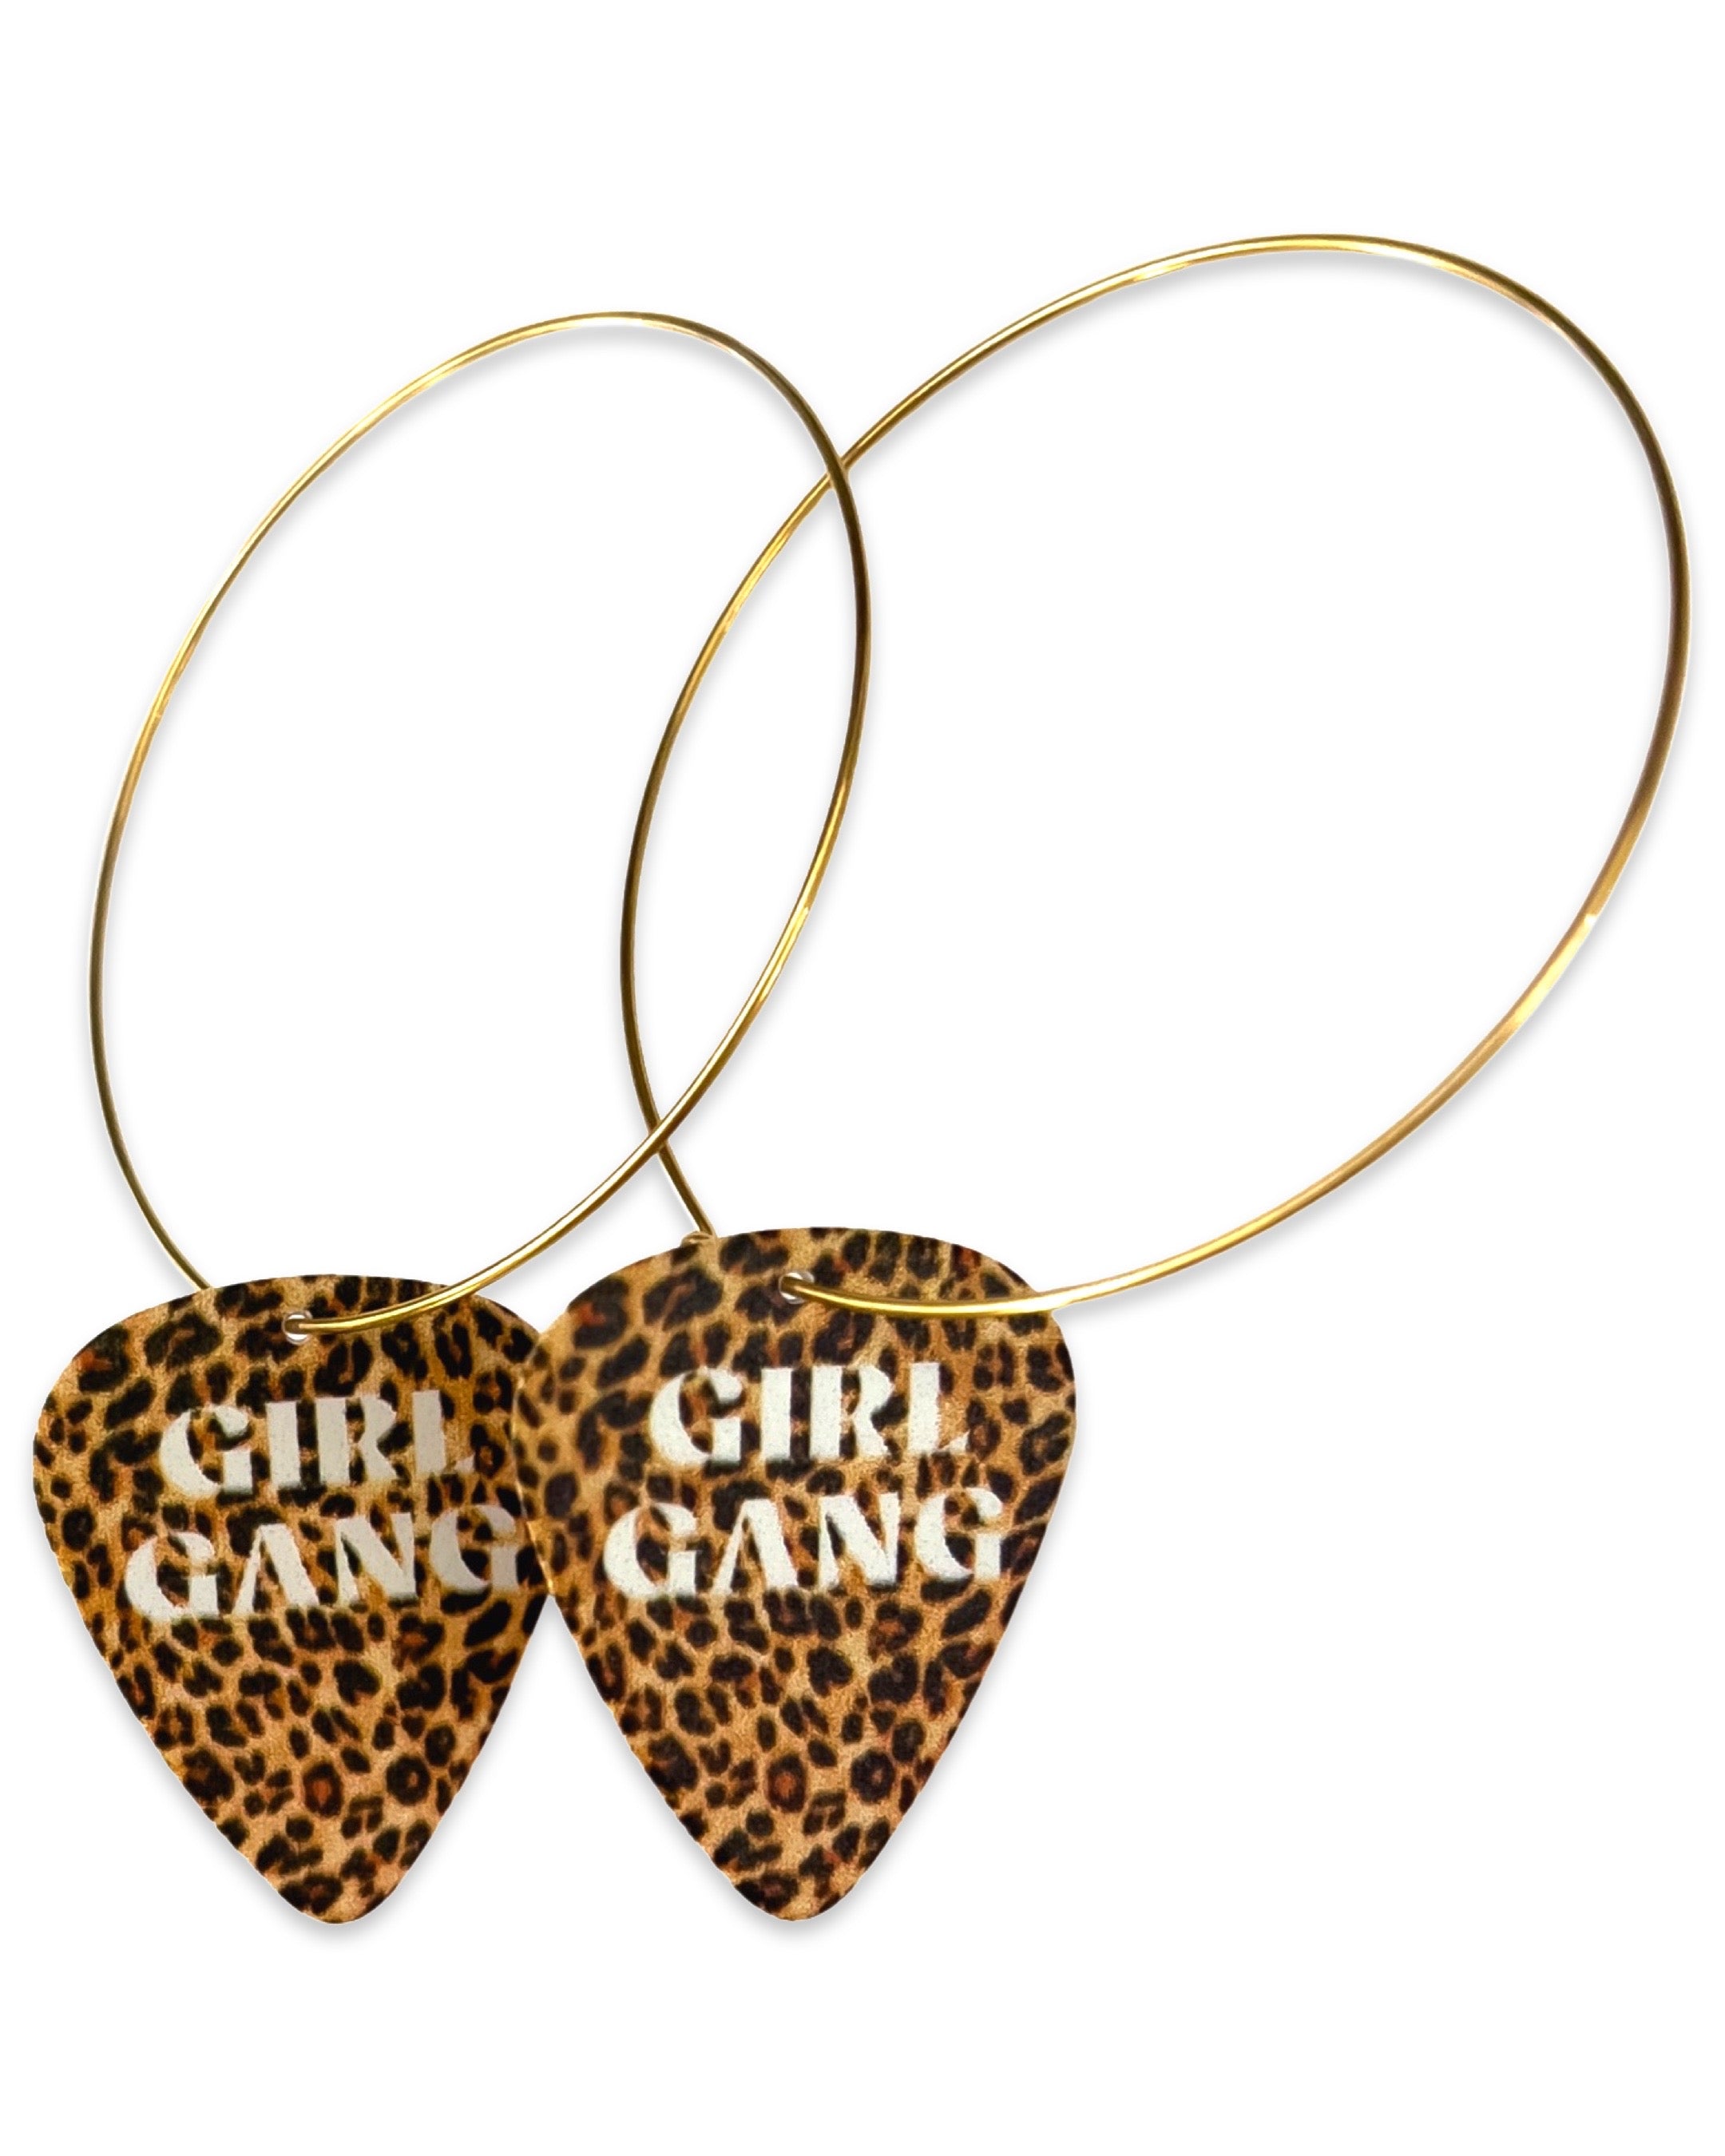 Girl Gang Cheetah Single Guitar Pick Earrings